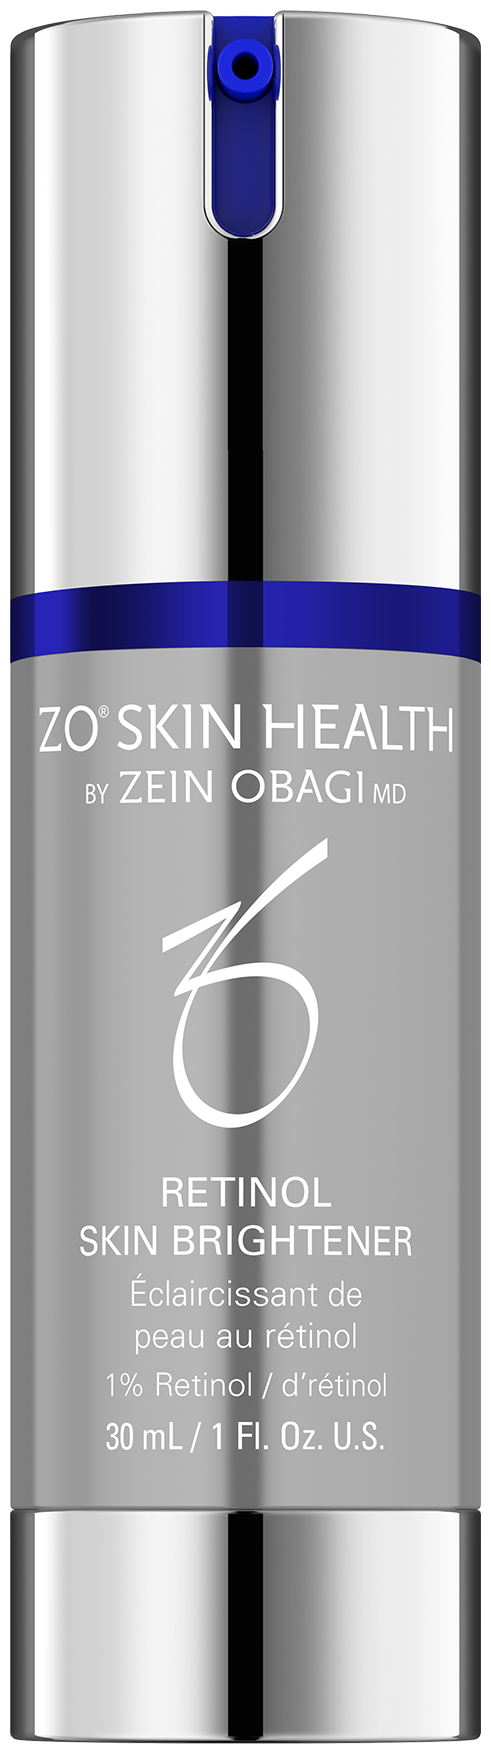 ZO Skin Health Retinol Skin Brightener 1% Крем для выравнивания тона кожи с ретинолом 1%, 30 мл